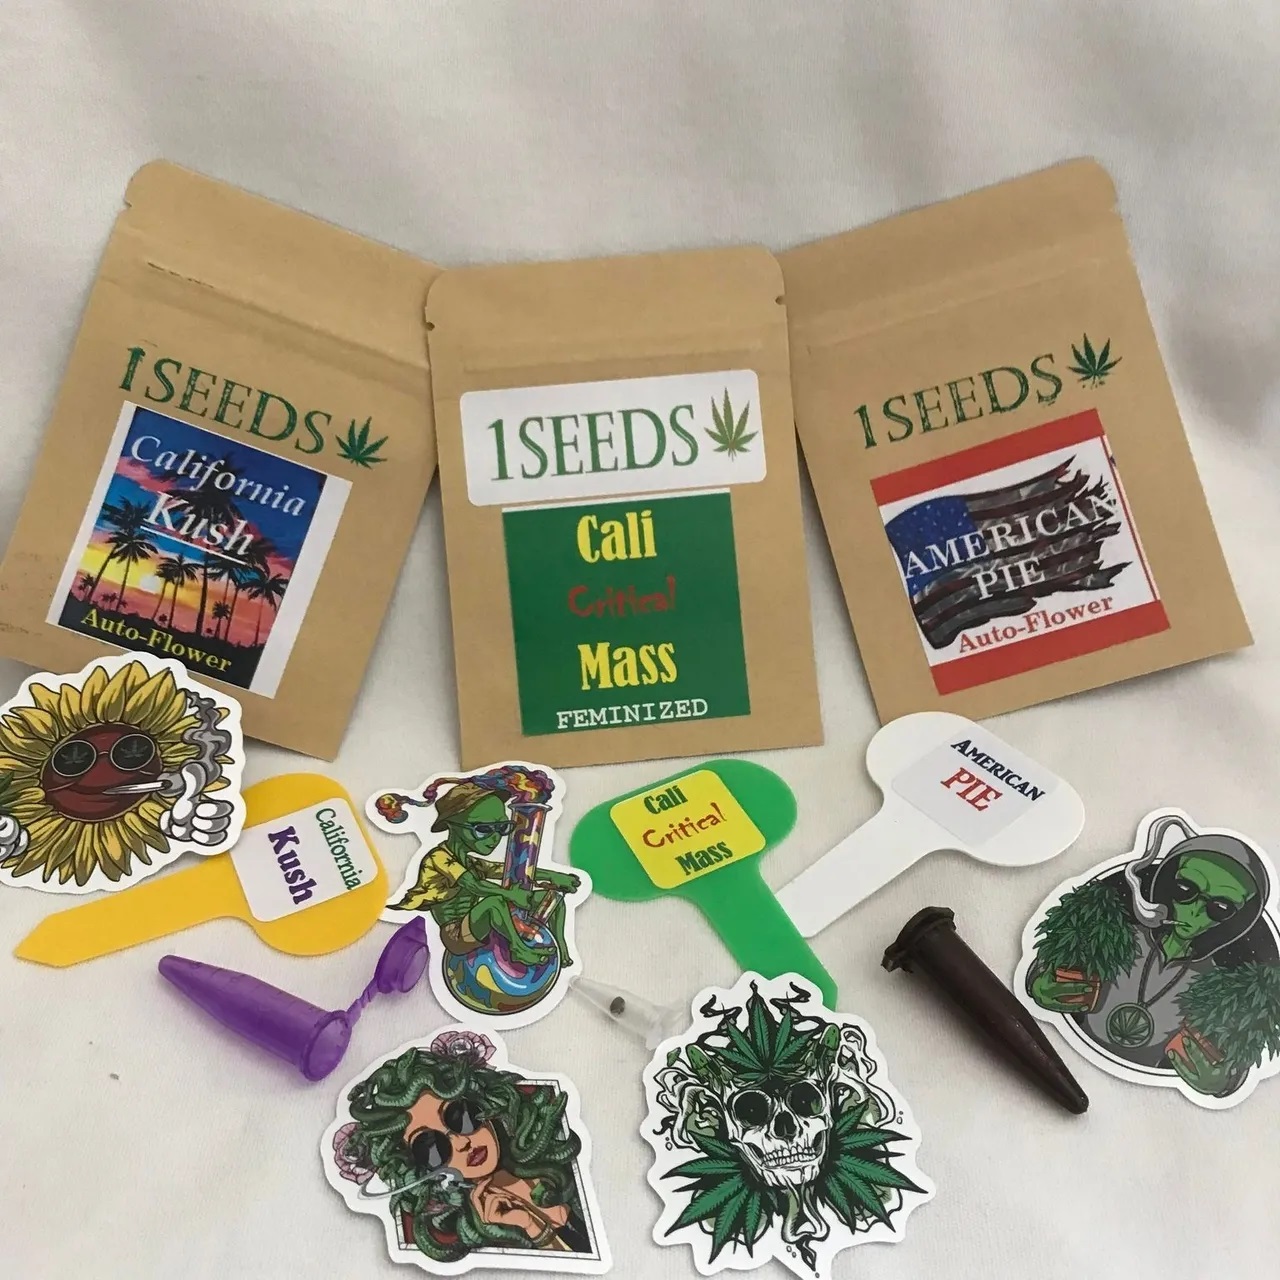 marijuana-seeds-buy-best-usa-1seeds